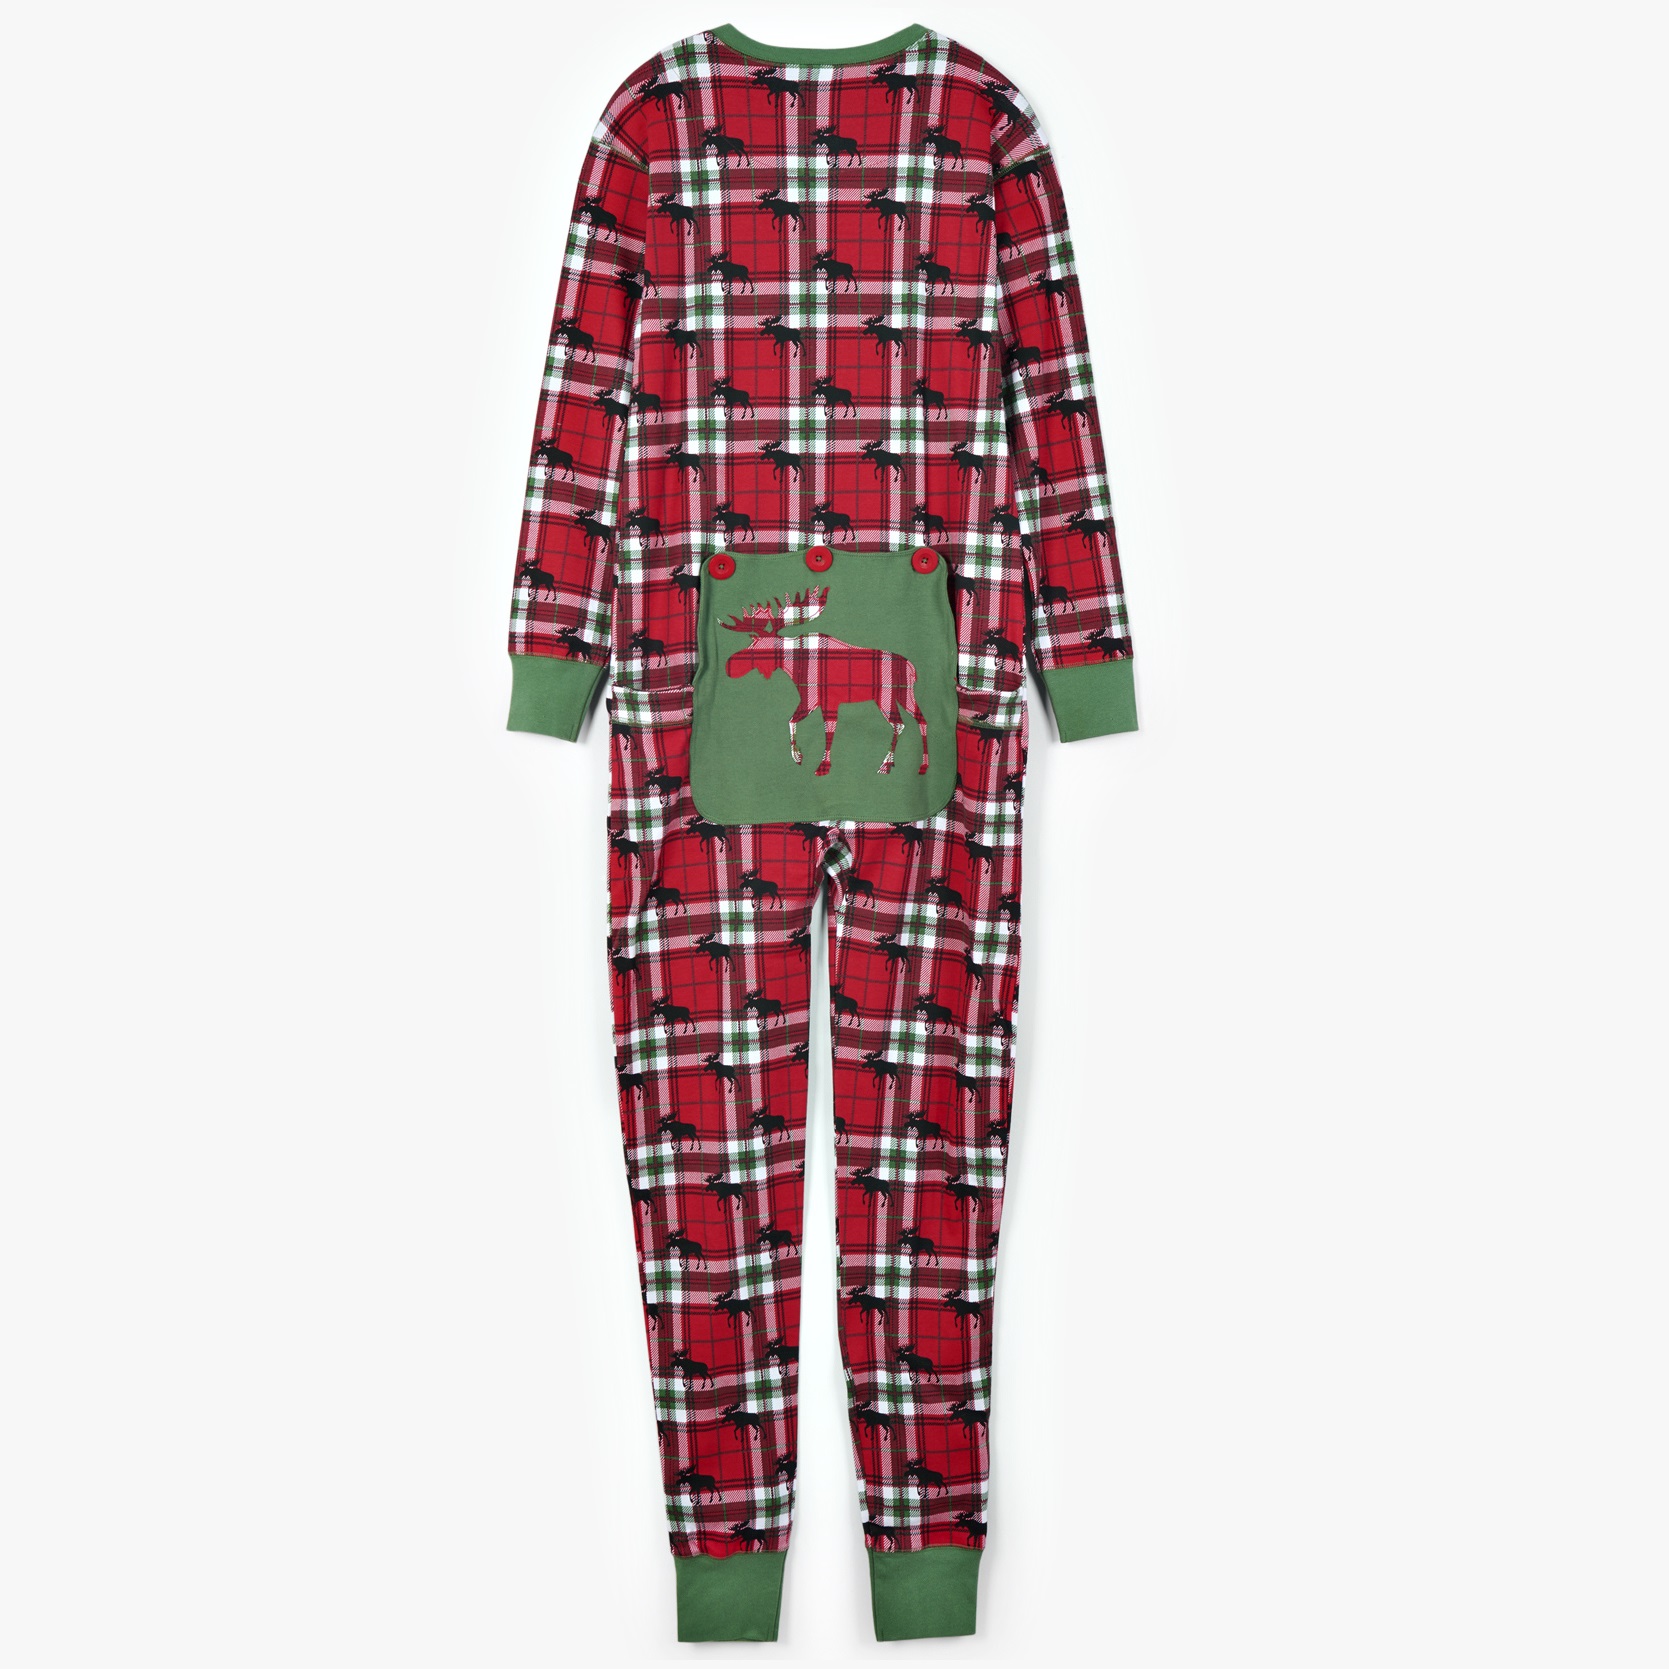 Moose on Buffalo Plaid Kids Onesie Union Suit Pajamas by Hatley 